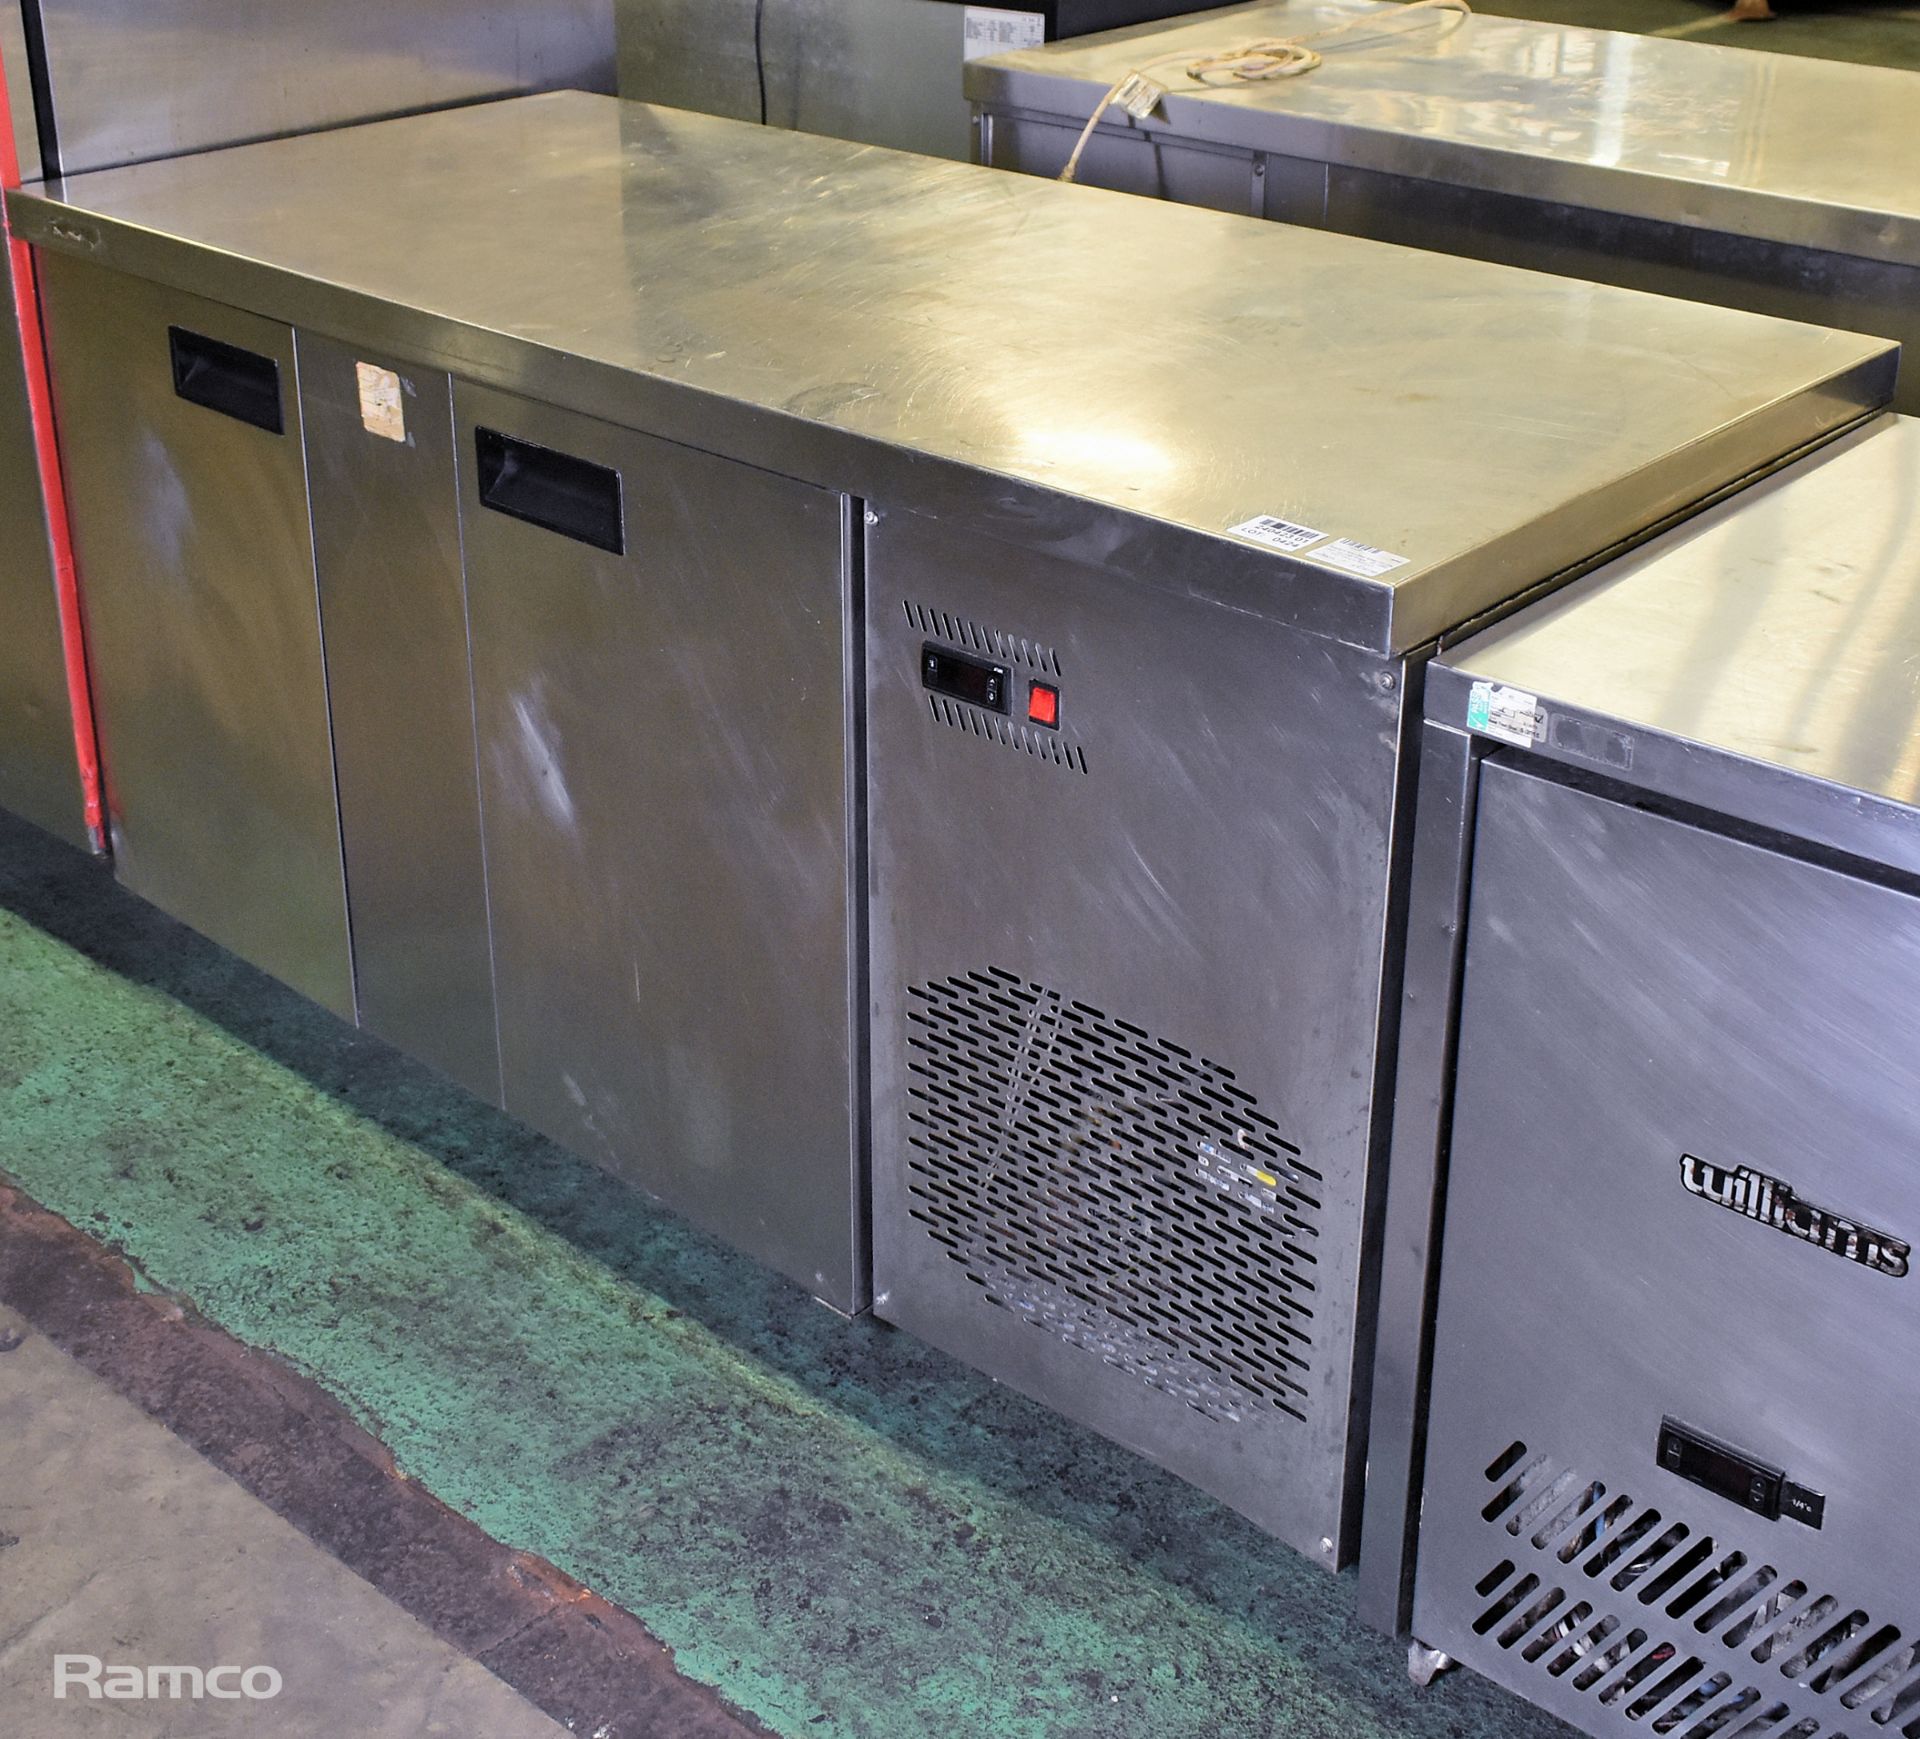 Blizzard stainless steel double door counter fridge - W 1560 x D 700 x H 860mm - Image 2 of 7